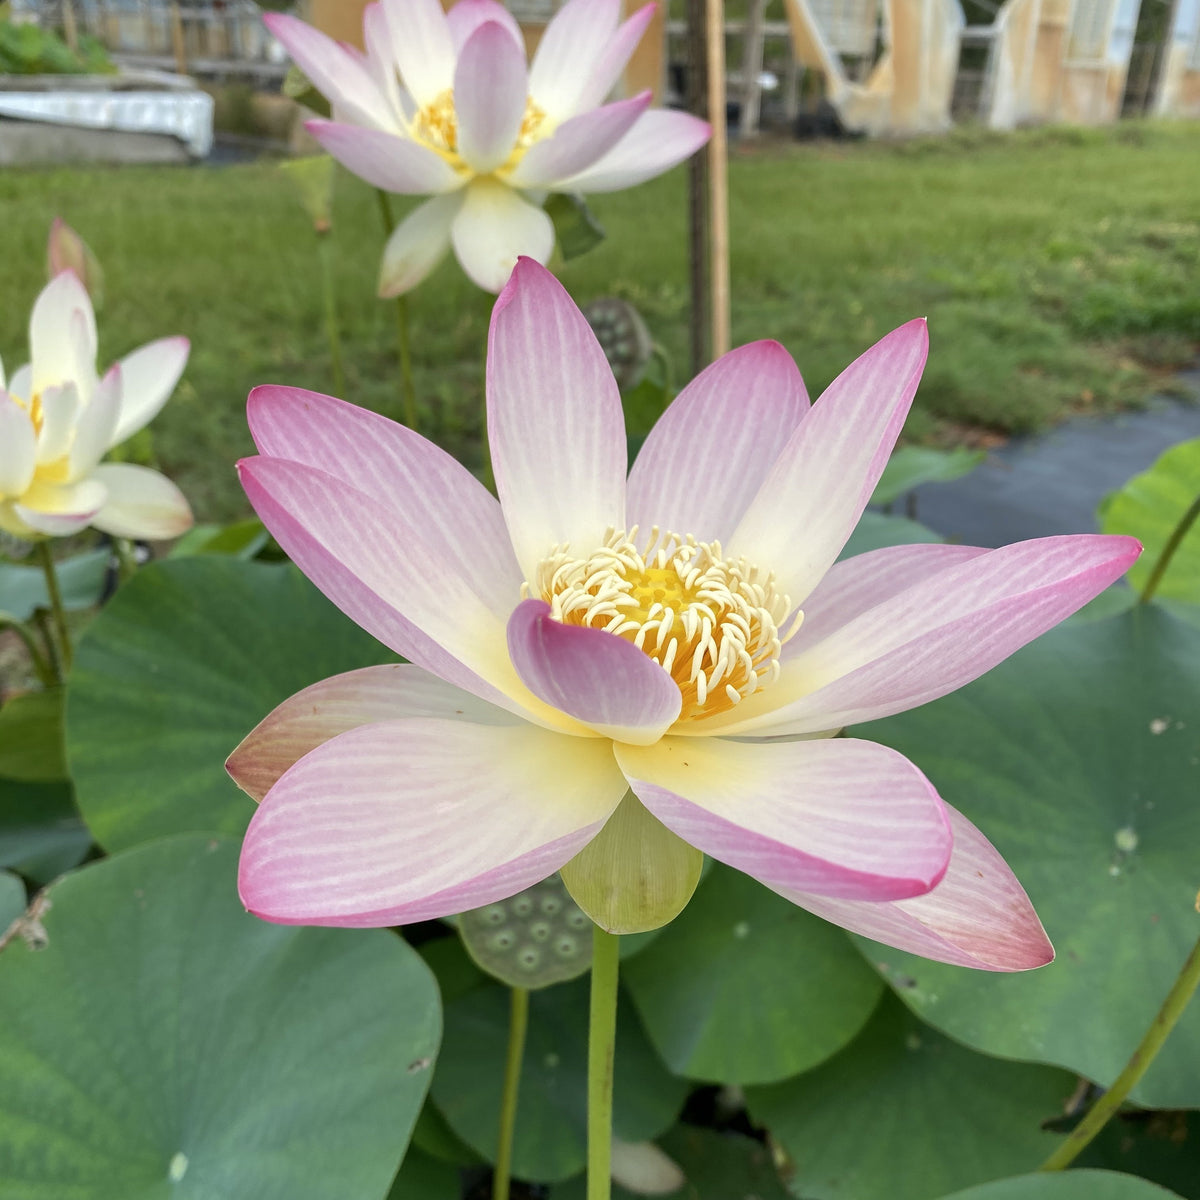 Green Star  Beautiful Lotus Flower Collections – Ten Mile Creek Nursery